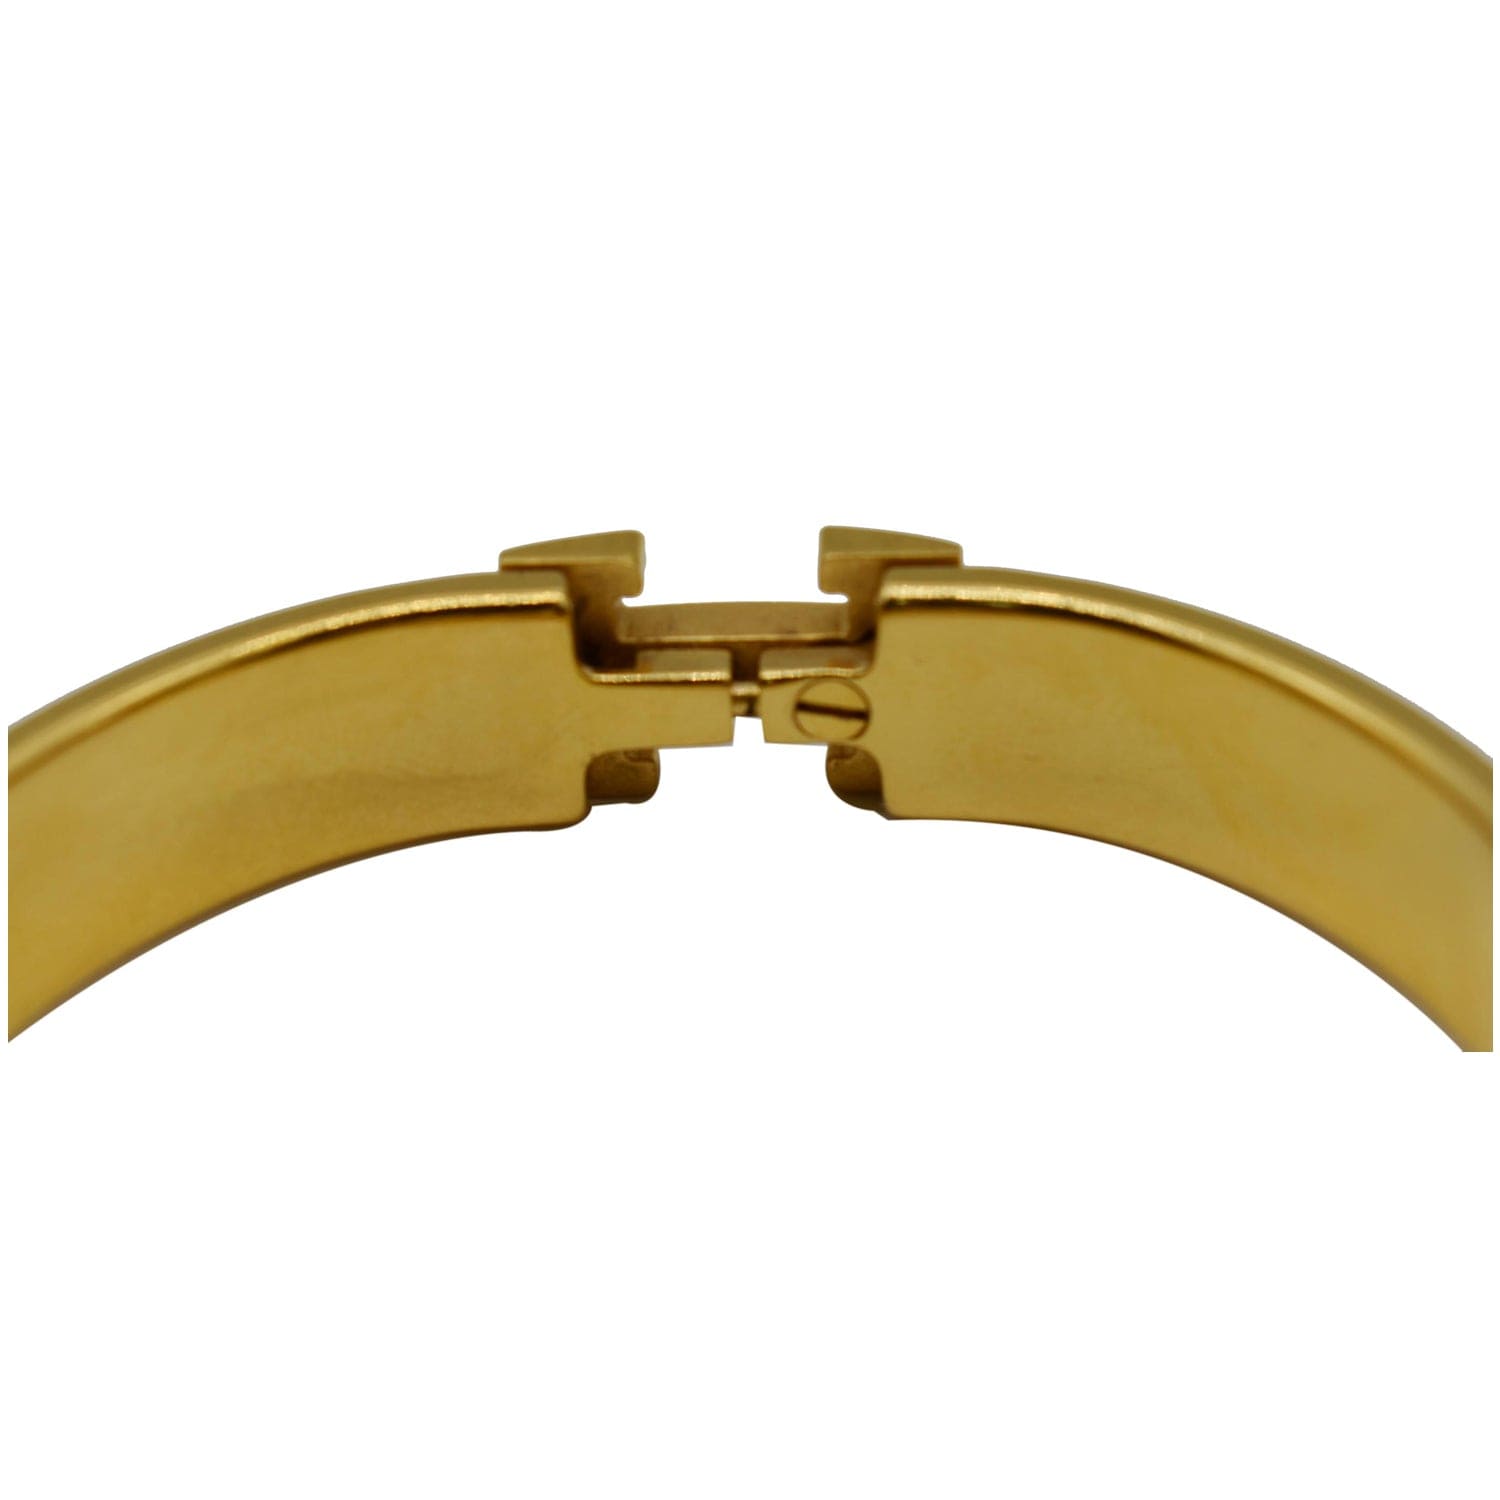 Hermès Clic Clac H Bracelet - Pink, 18K Yellow Gold-Plated Bangle, Bracelets  - HER561300